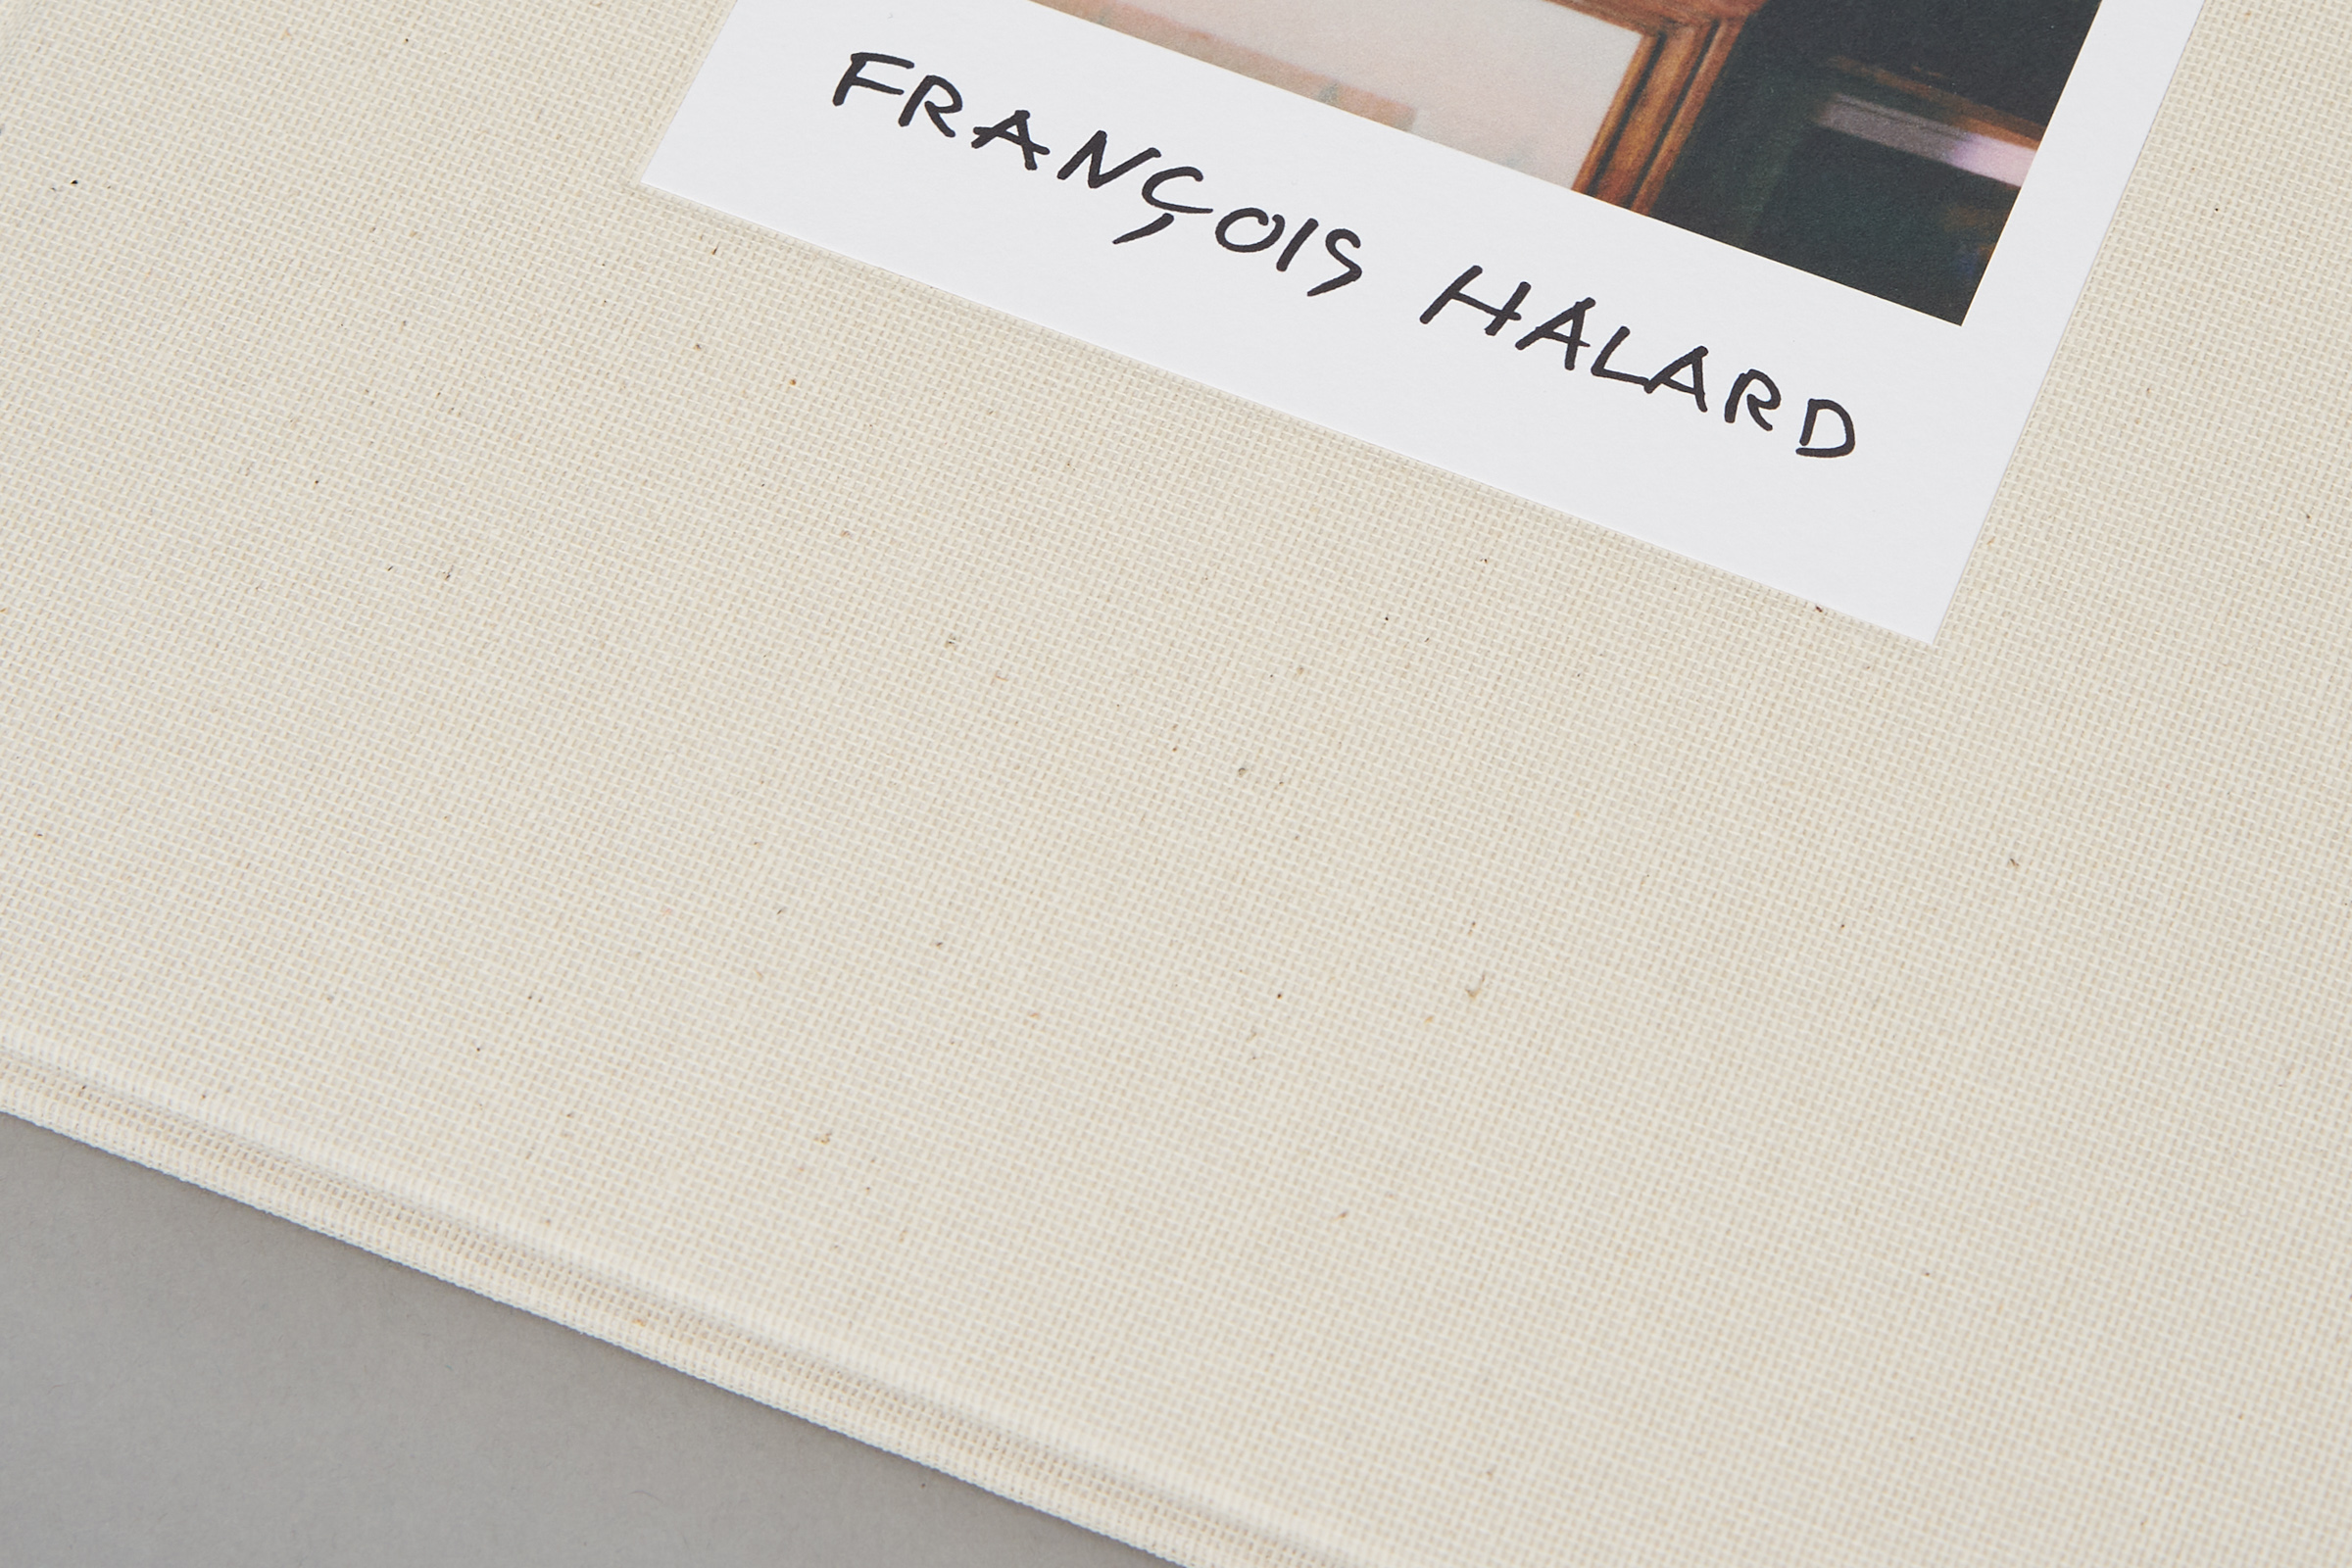 François Halard — 56 Days in Arles — Book